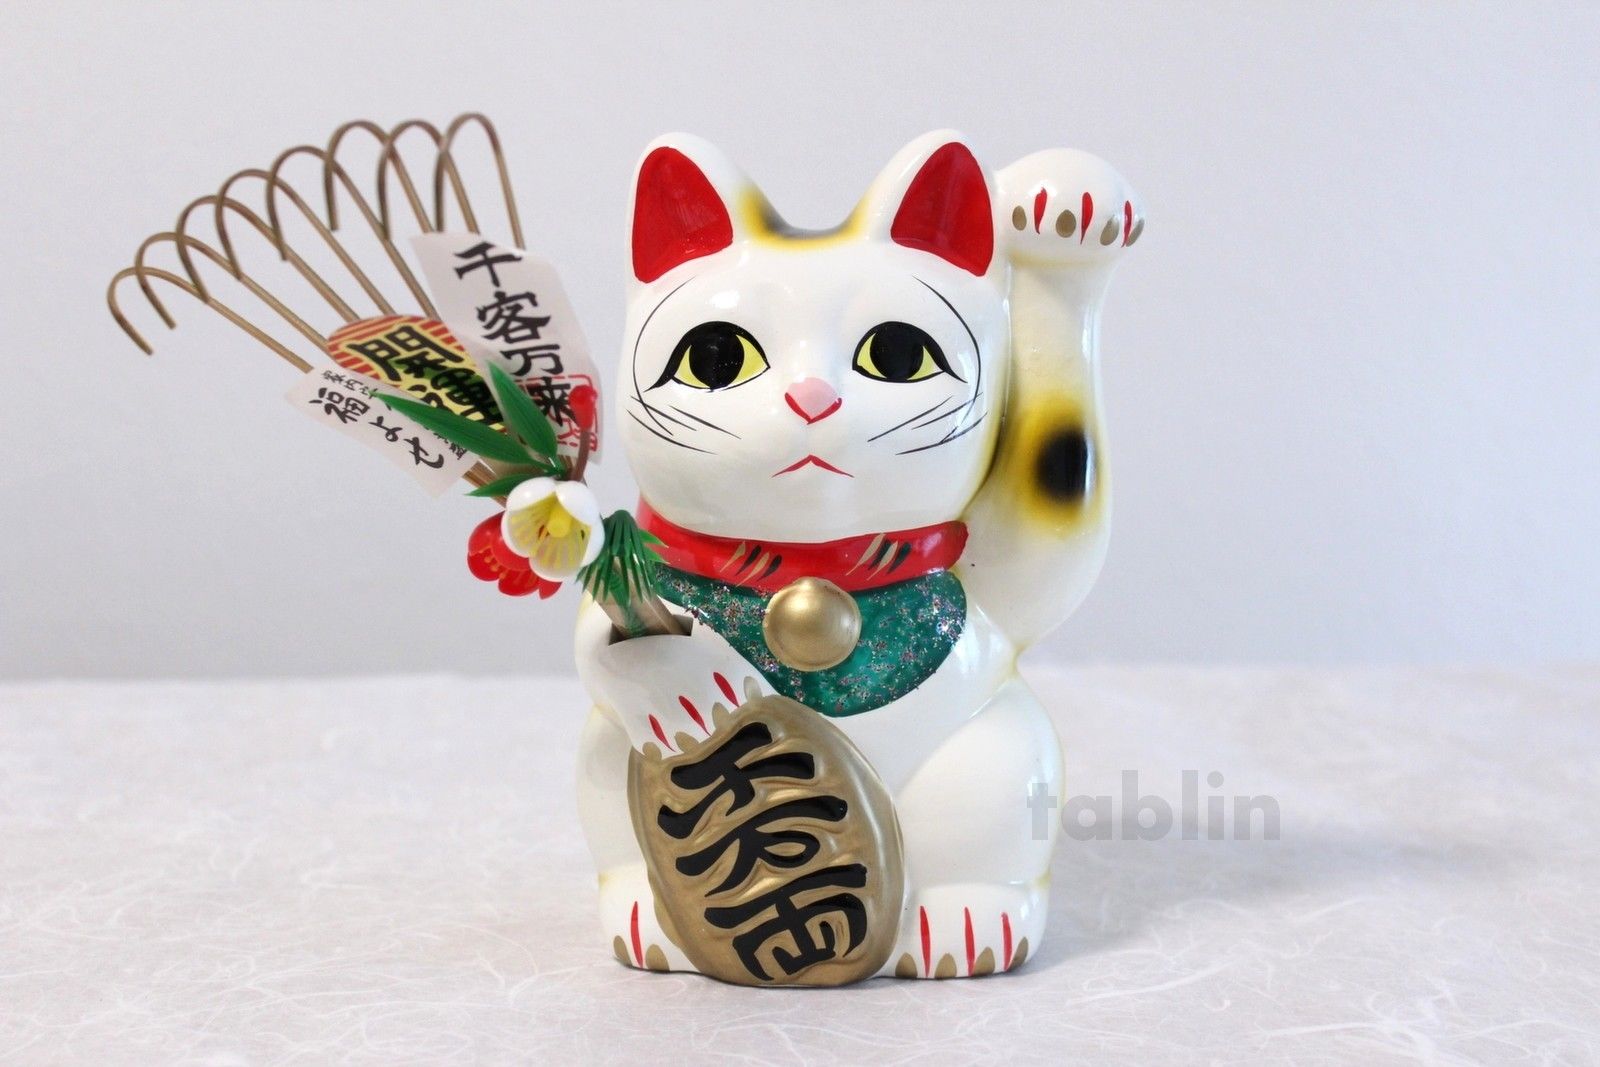 Maneki Neko: Japan's Beckoning Cat